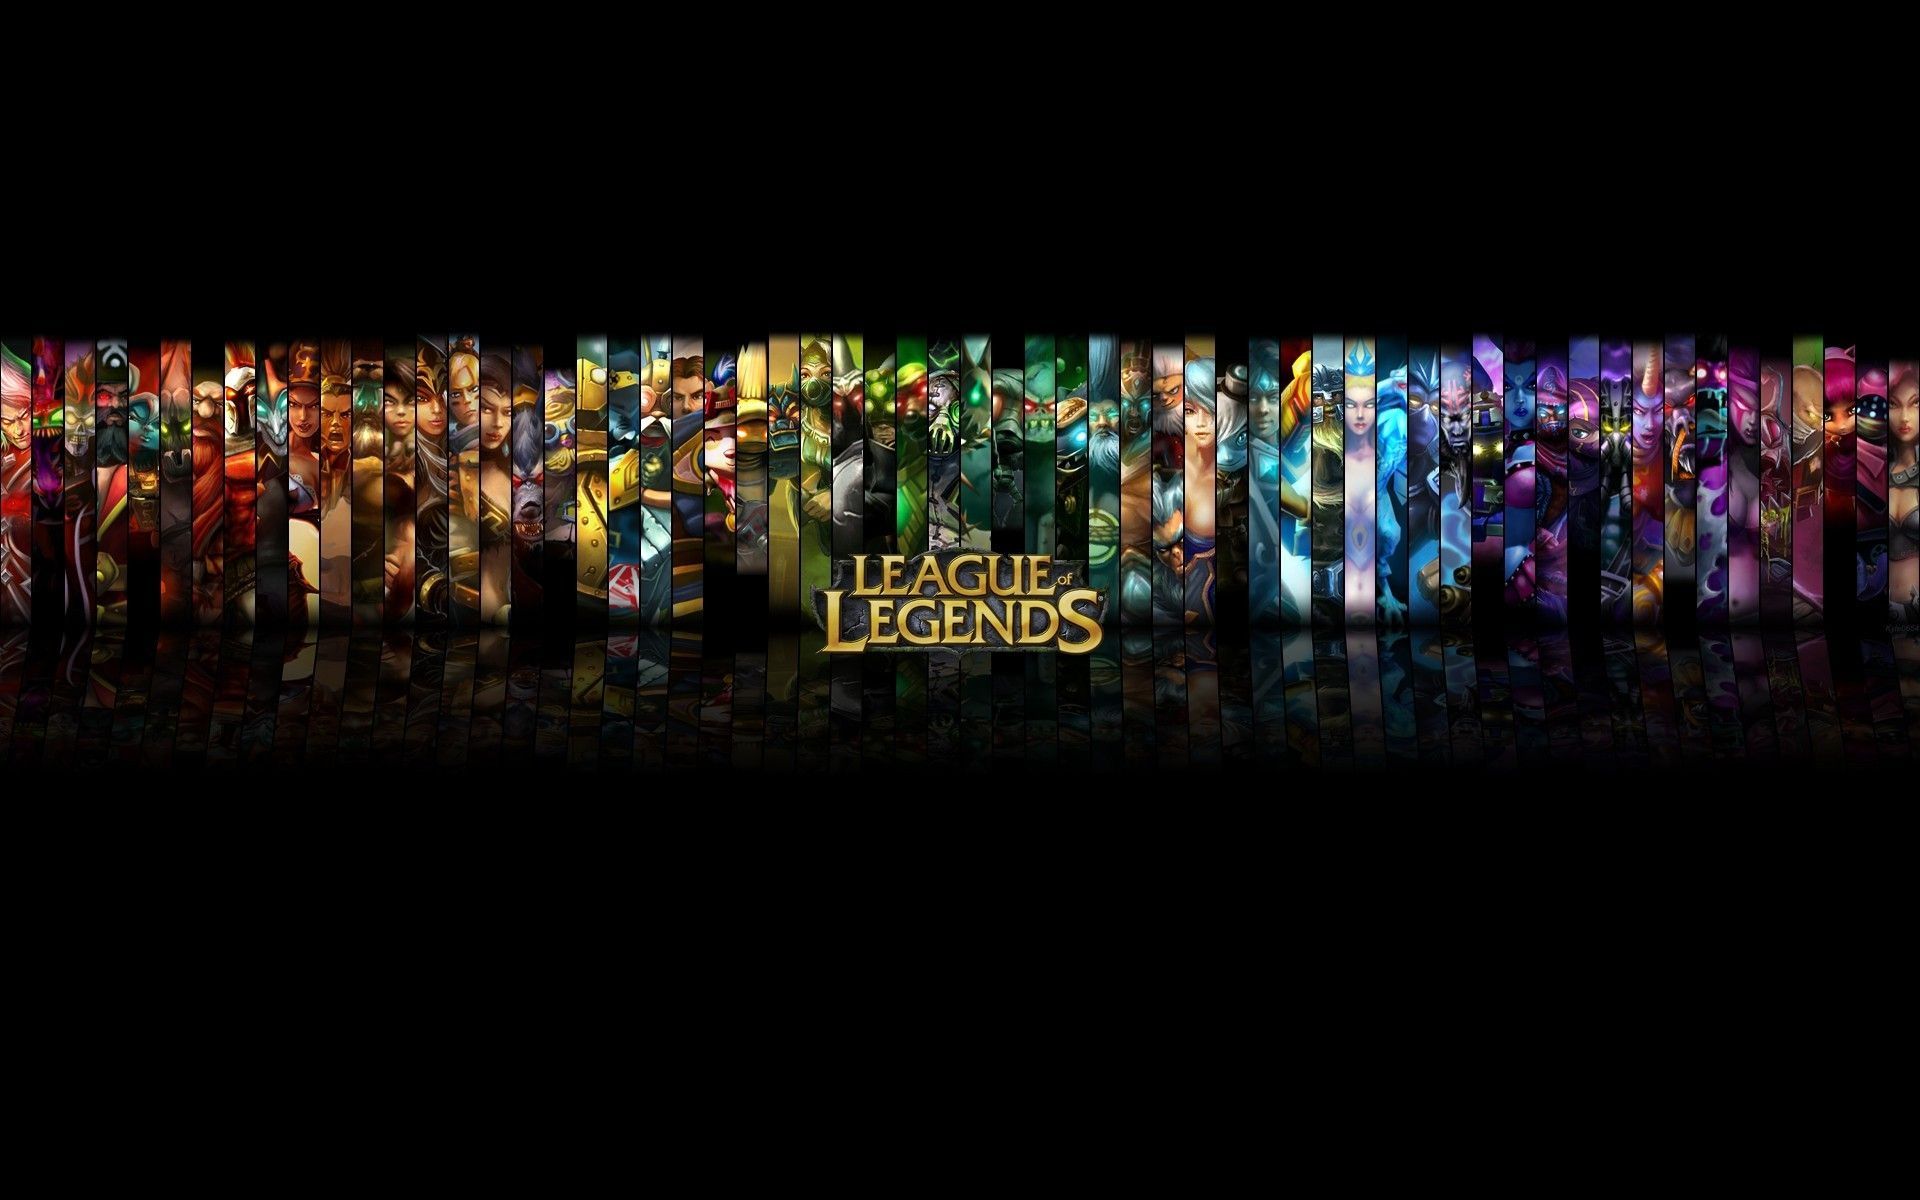 League of Legends Wallpaper - HD Images New